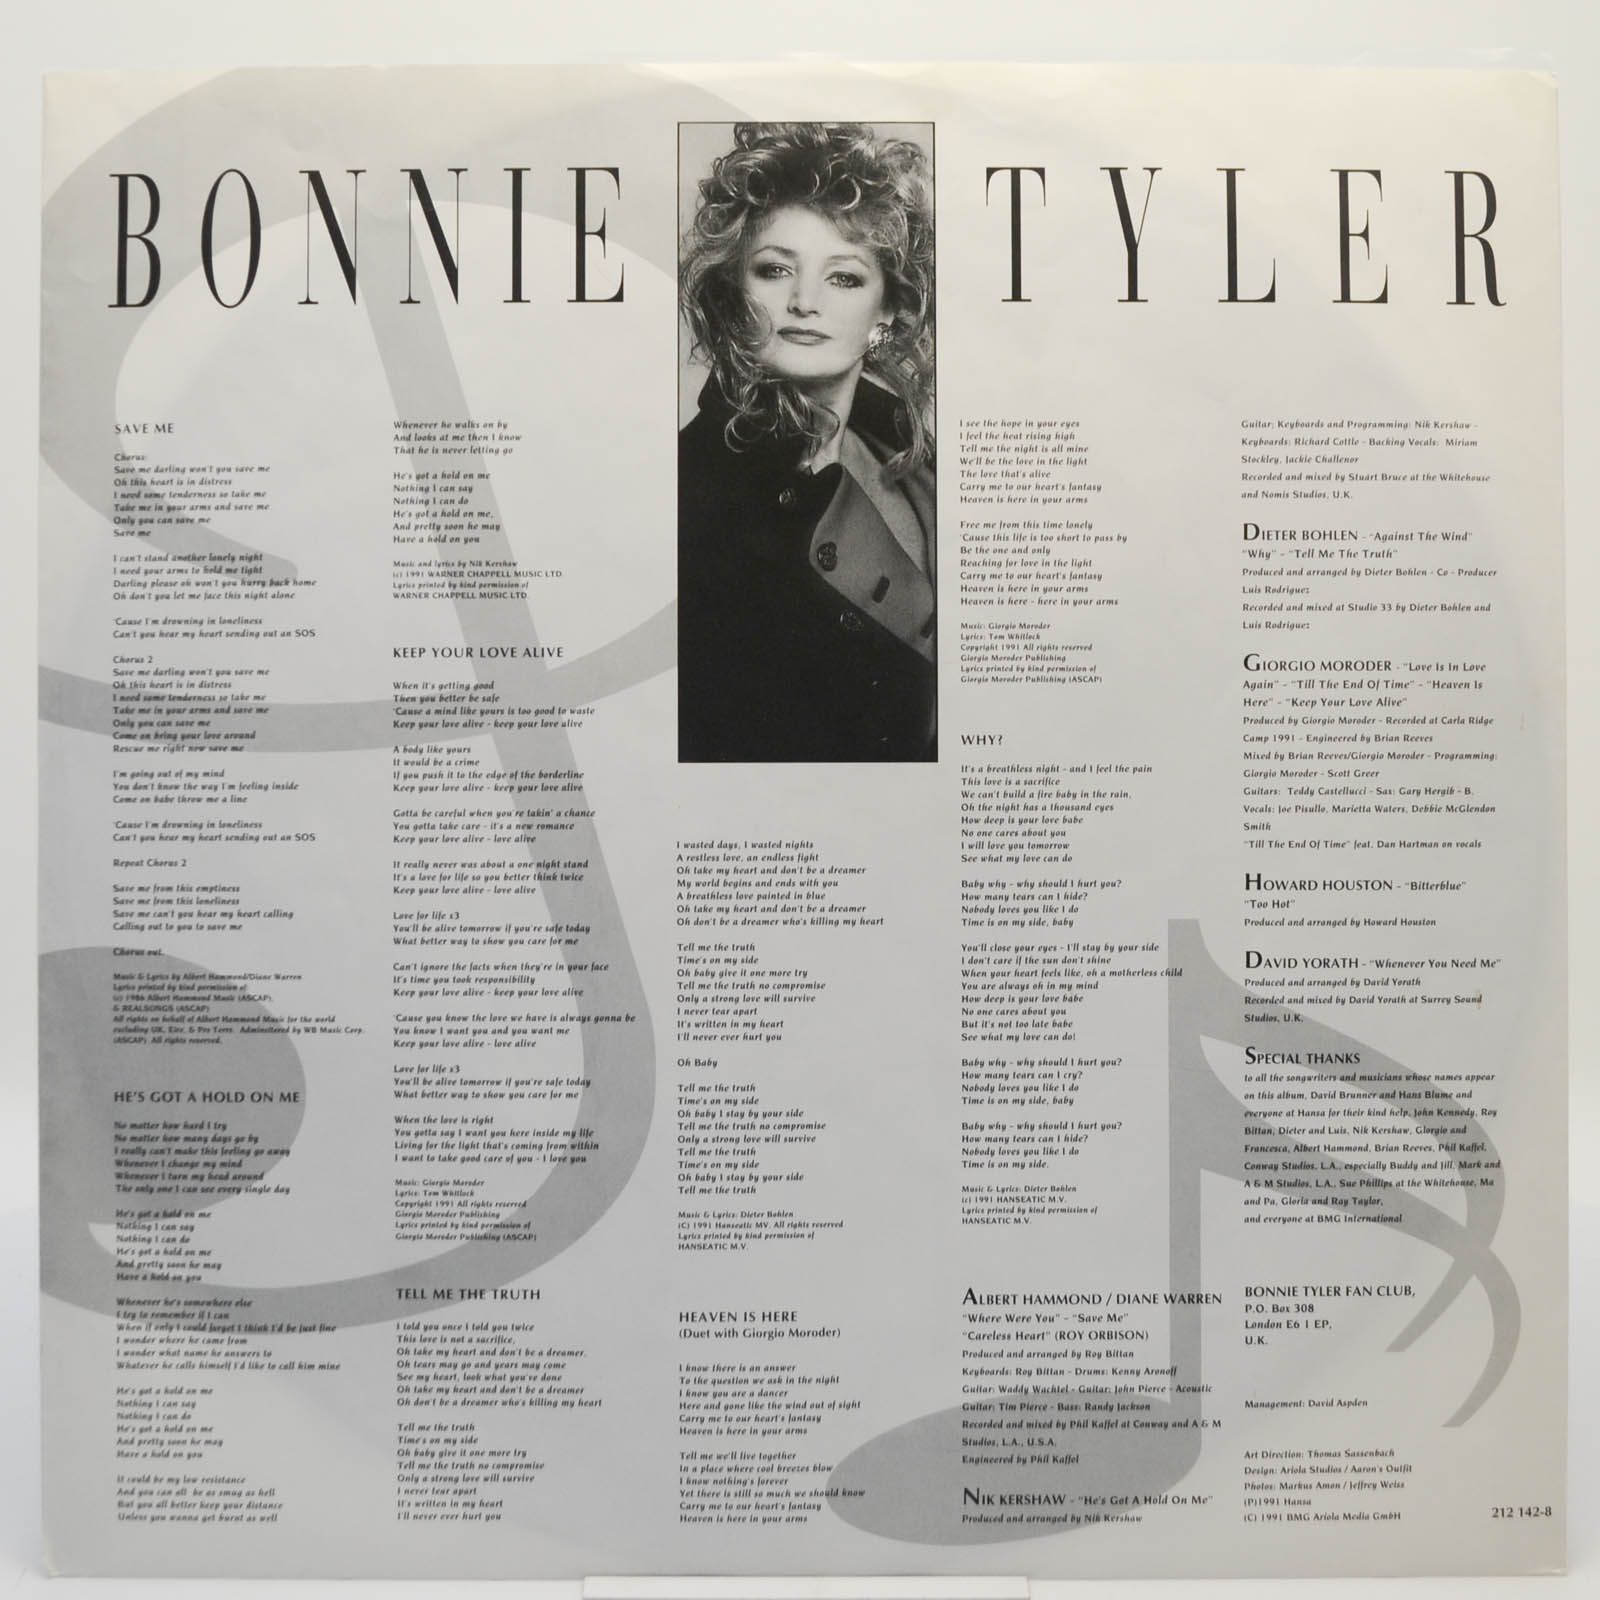 Bonnie Tyler — Bitterblue, 1991